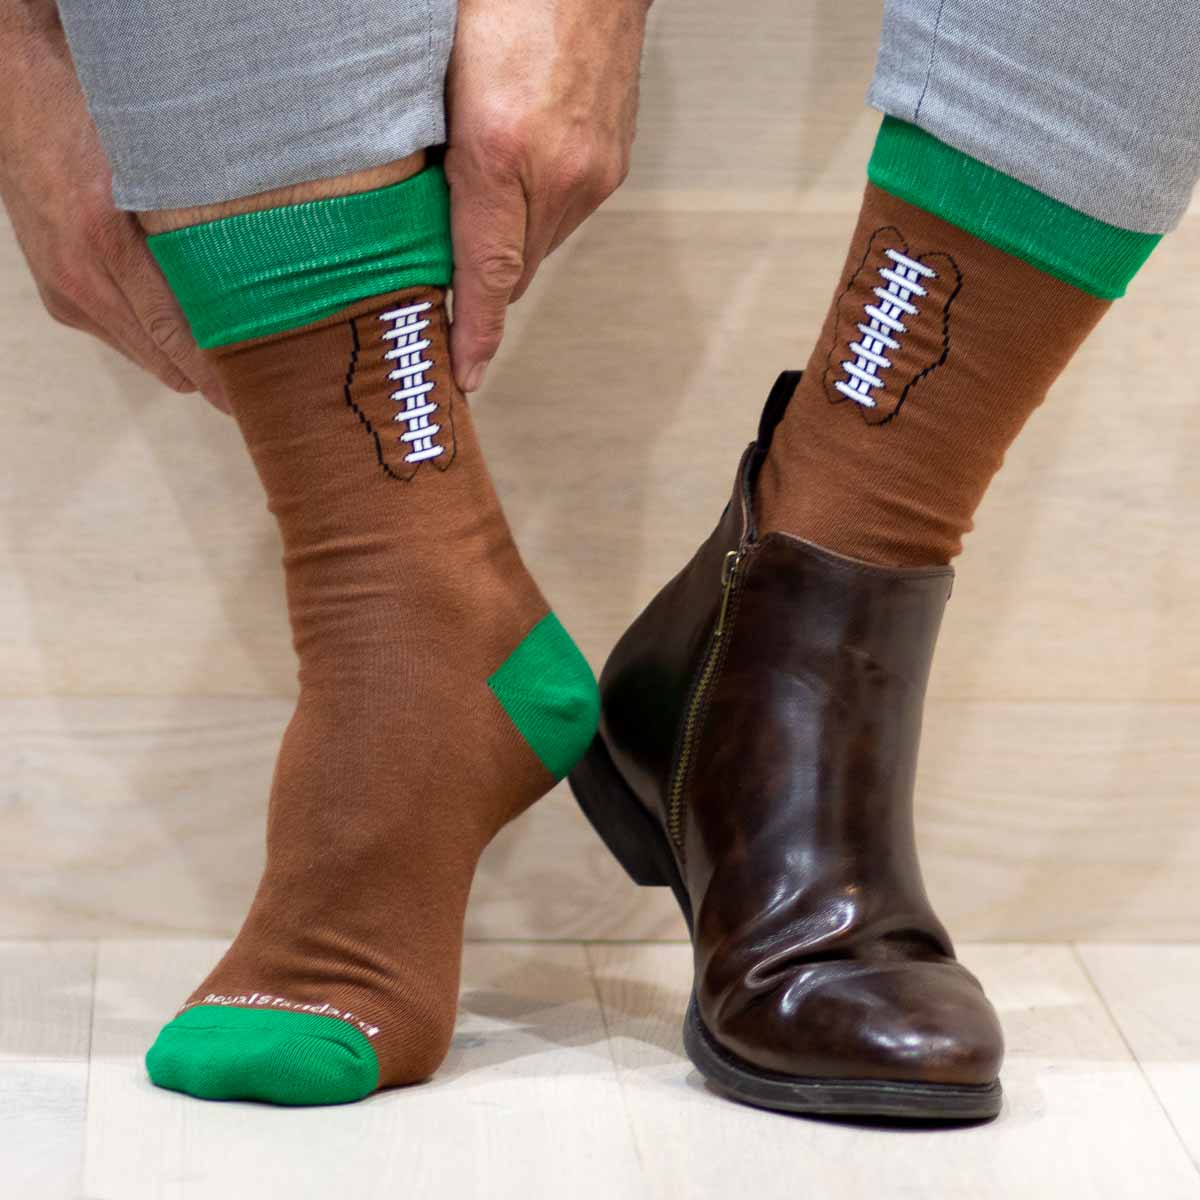 The Royal Standard Men's Football Lace Socks